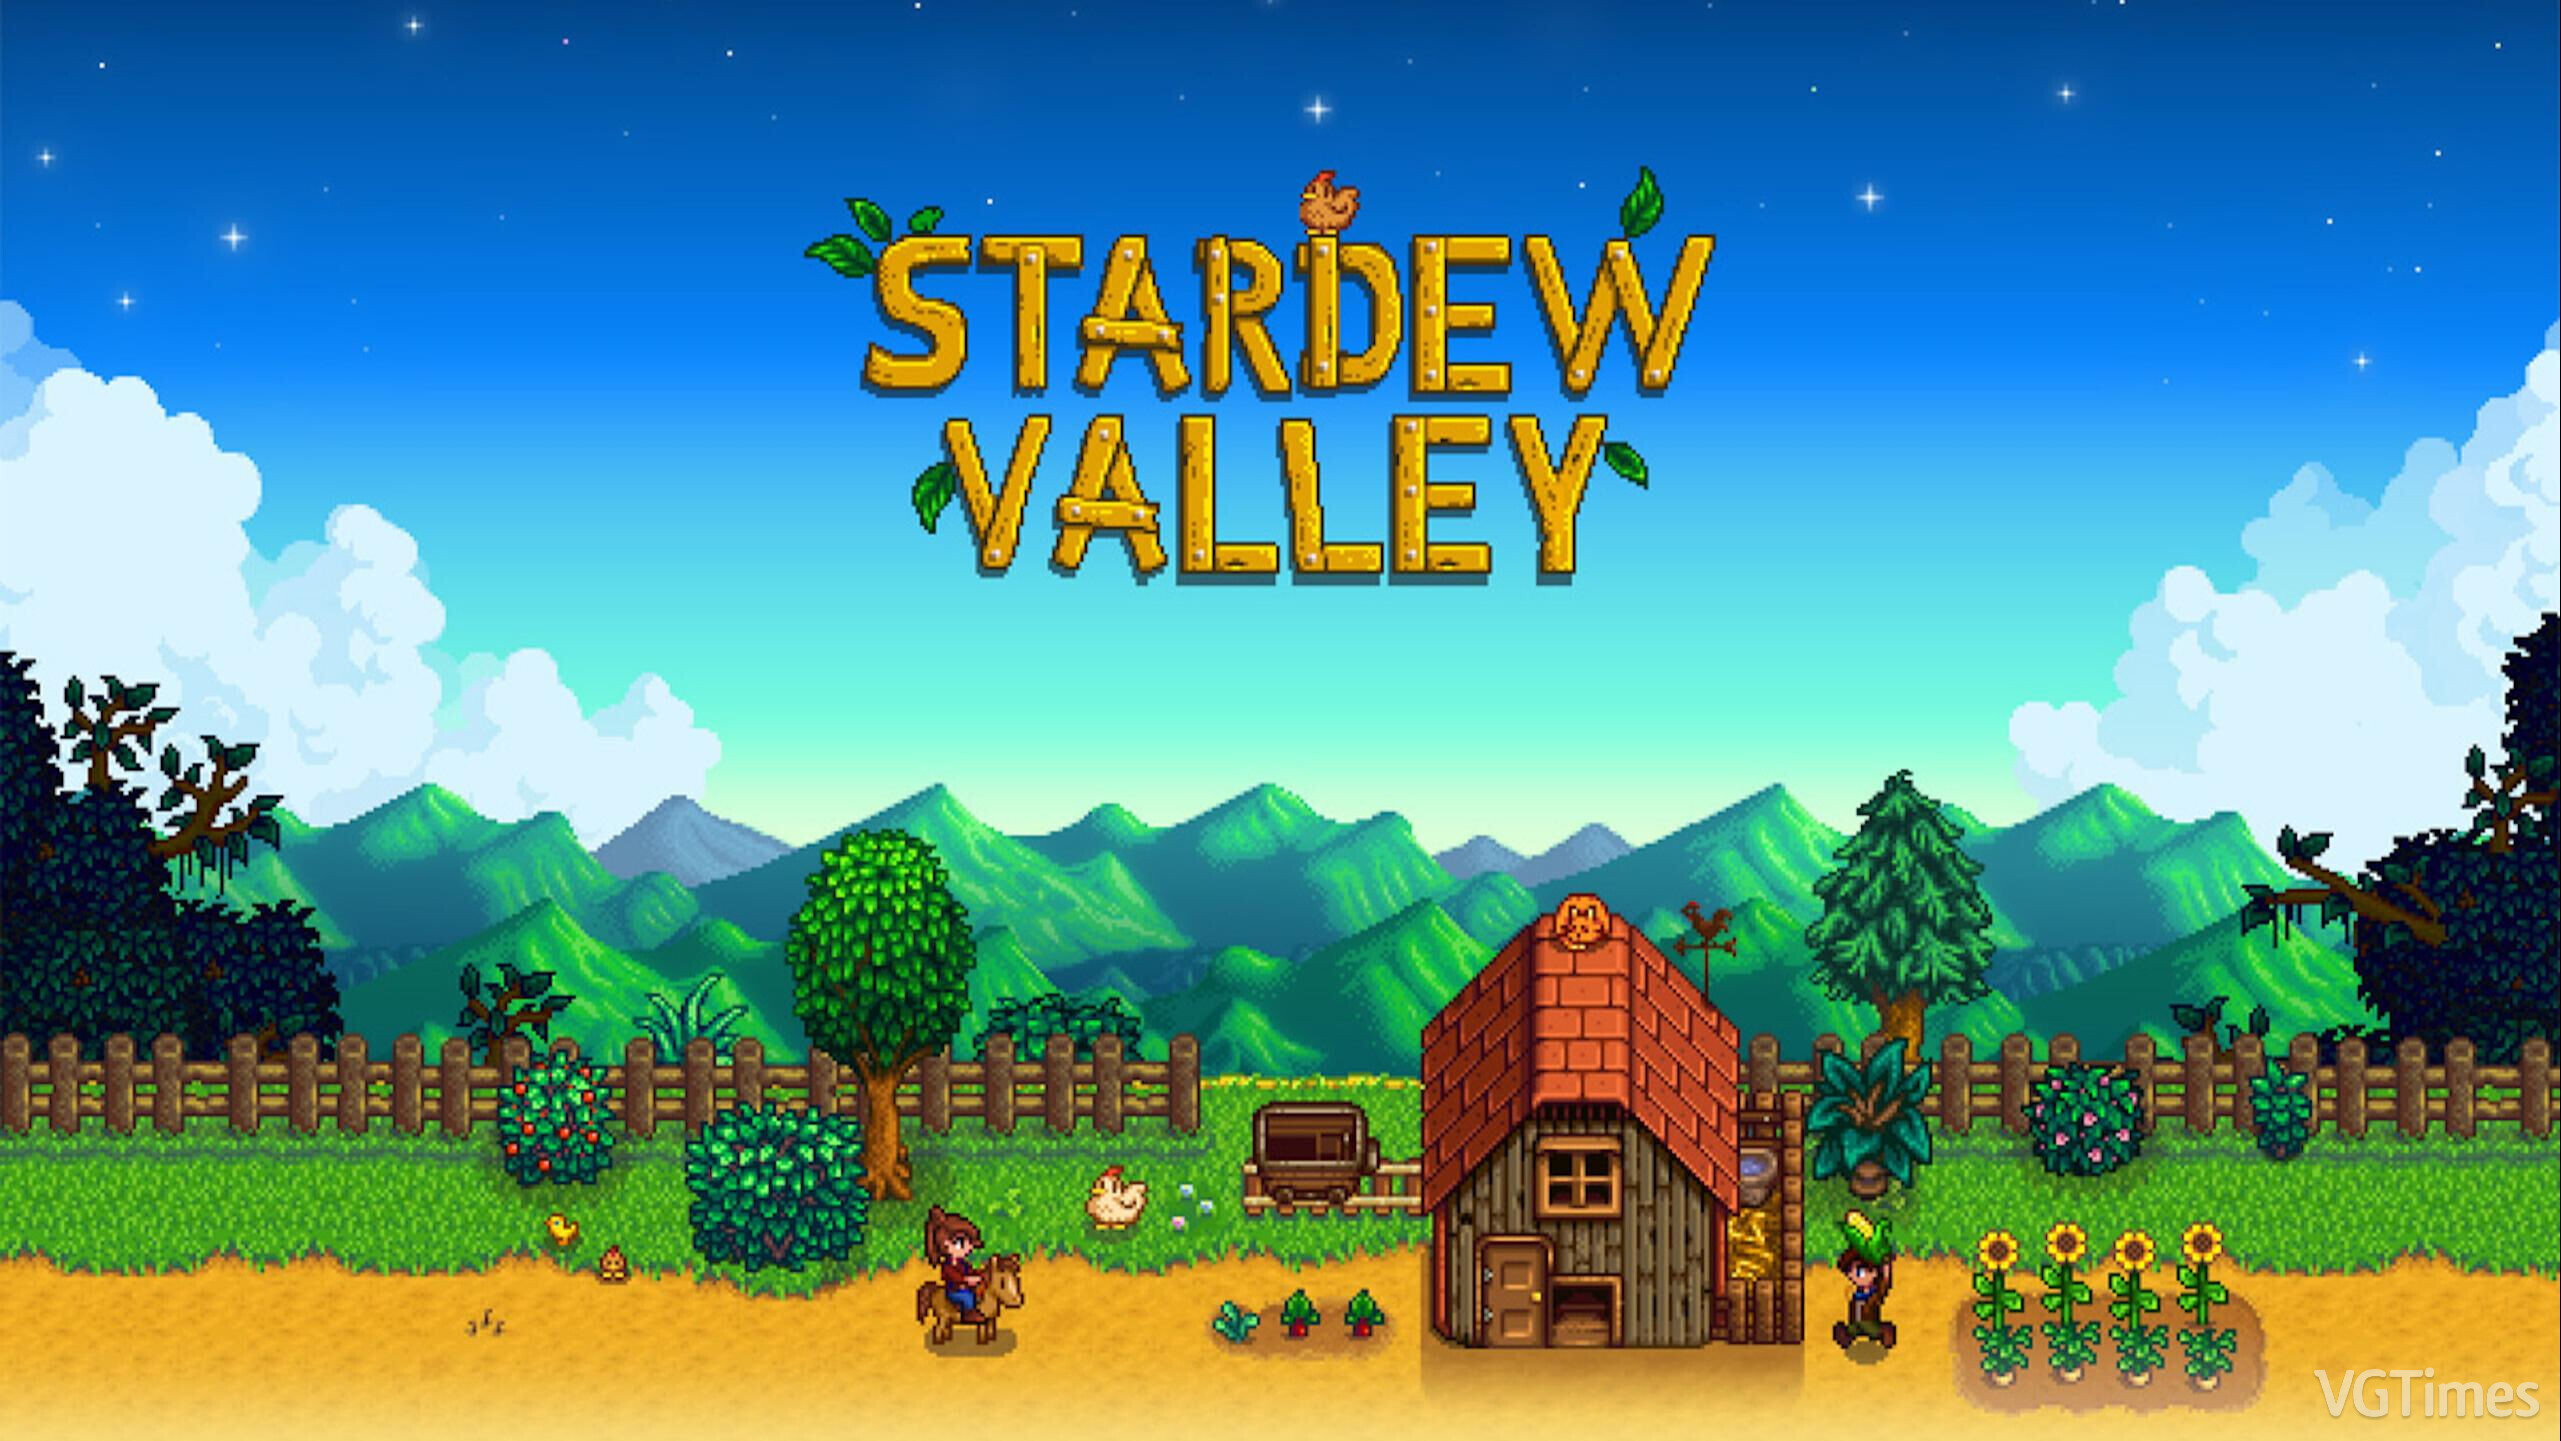 Старди валли 1.5. Stardew Valley обложка. Stardew Valley (2016). Stardew Valley плакат. Игра Стардью Валли.